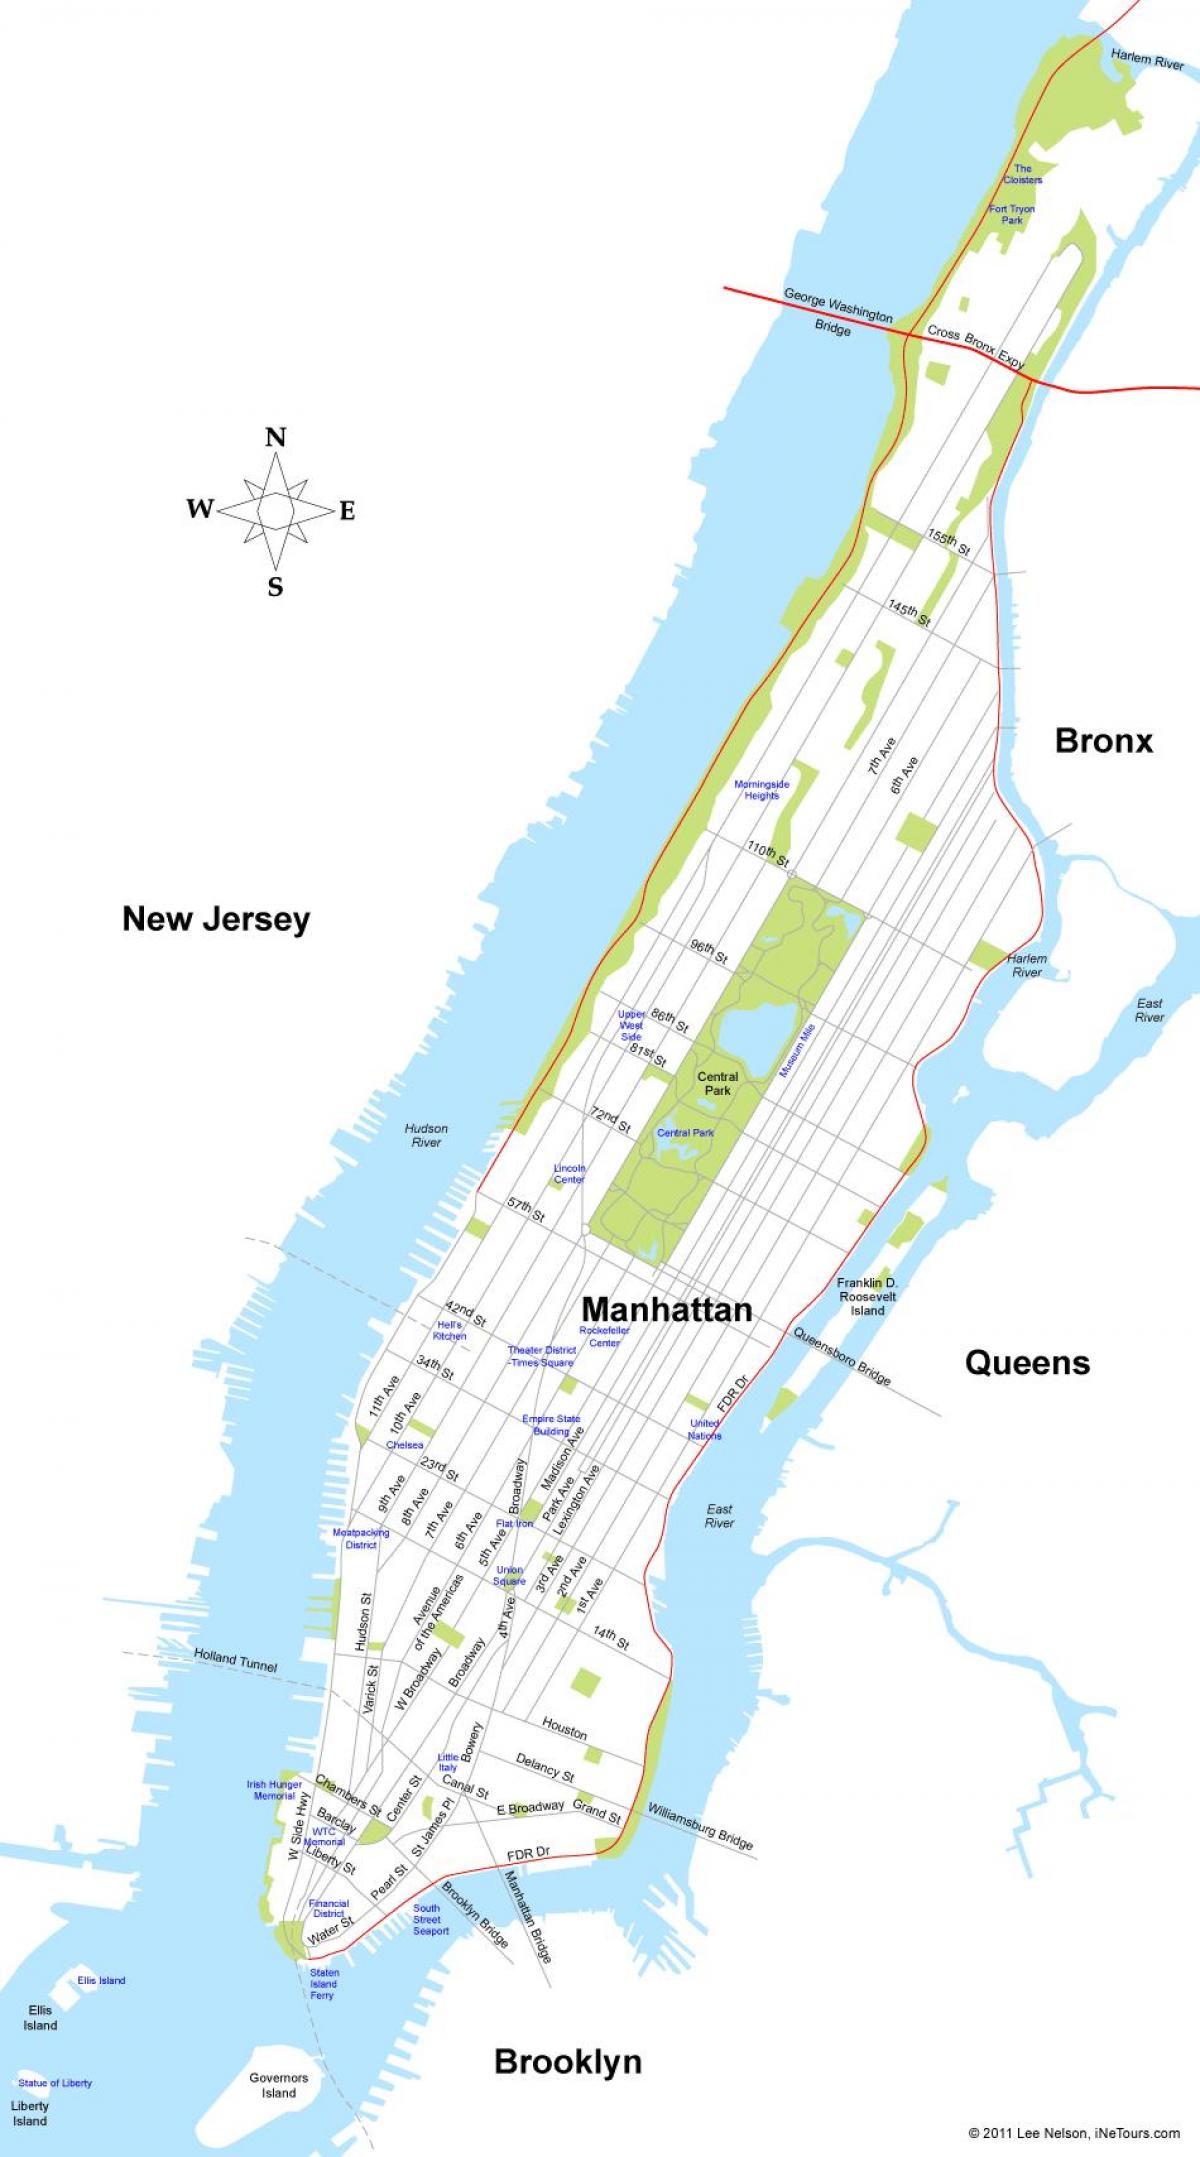 mapa de l'illa de Manhattan de Nova York